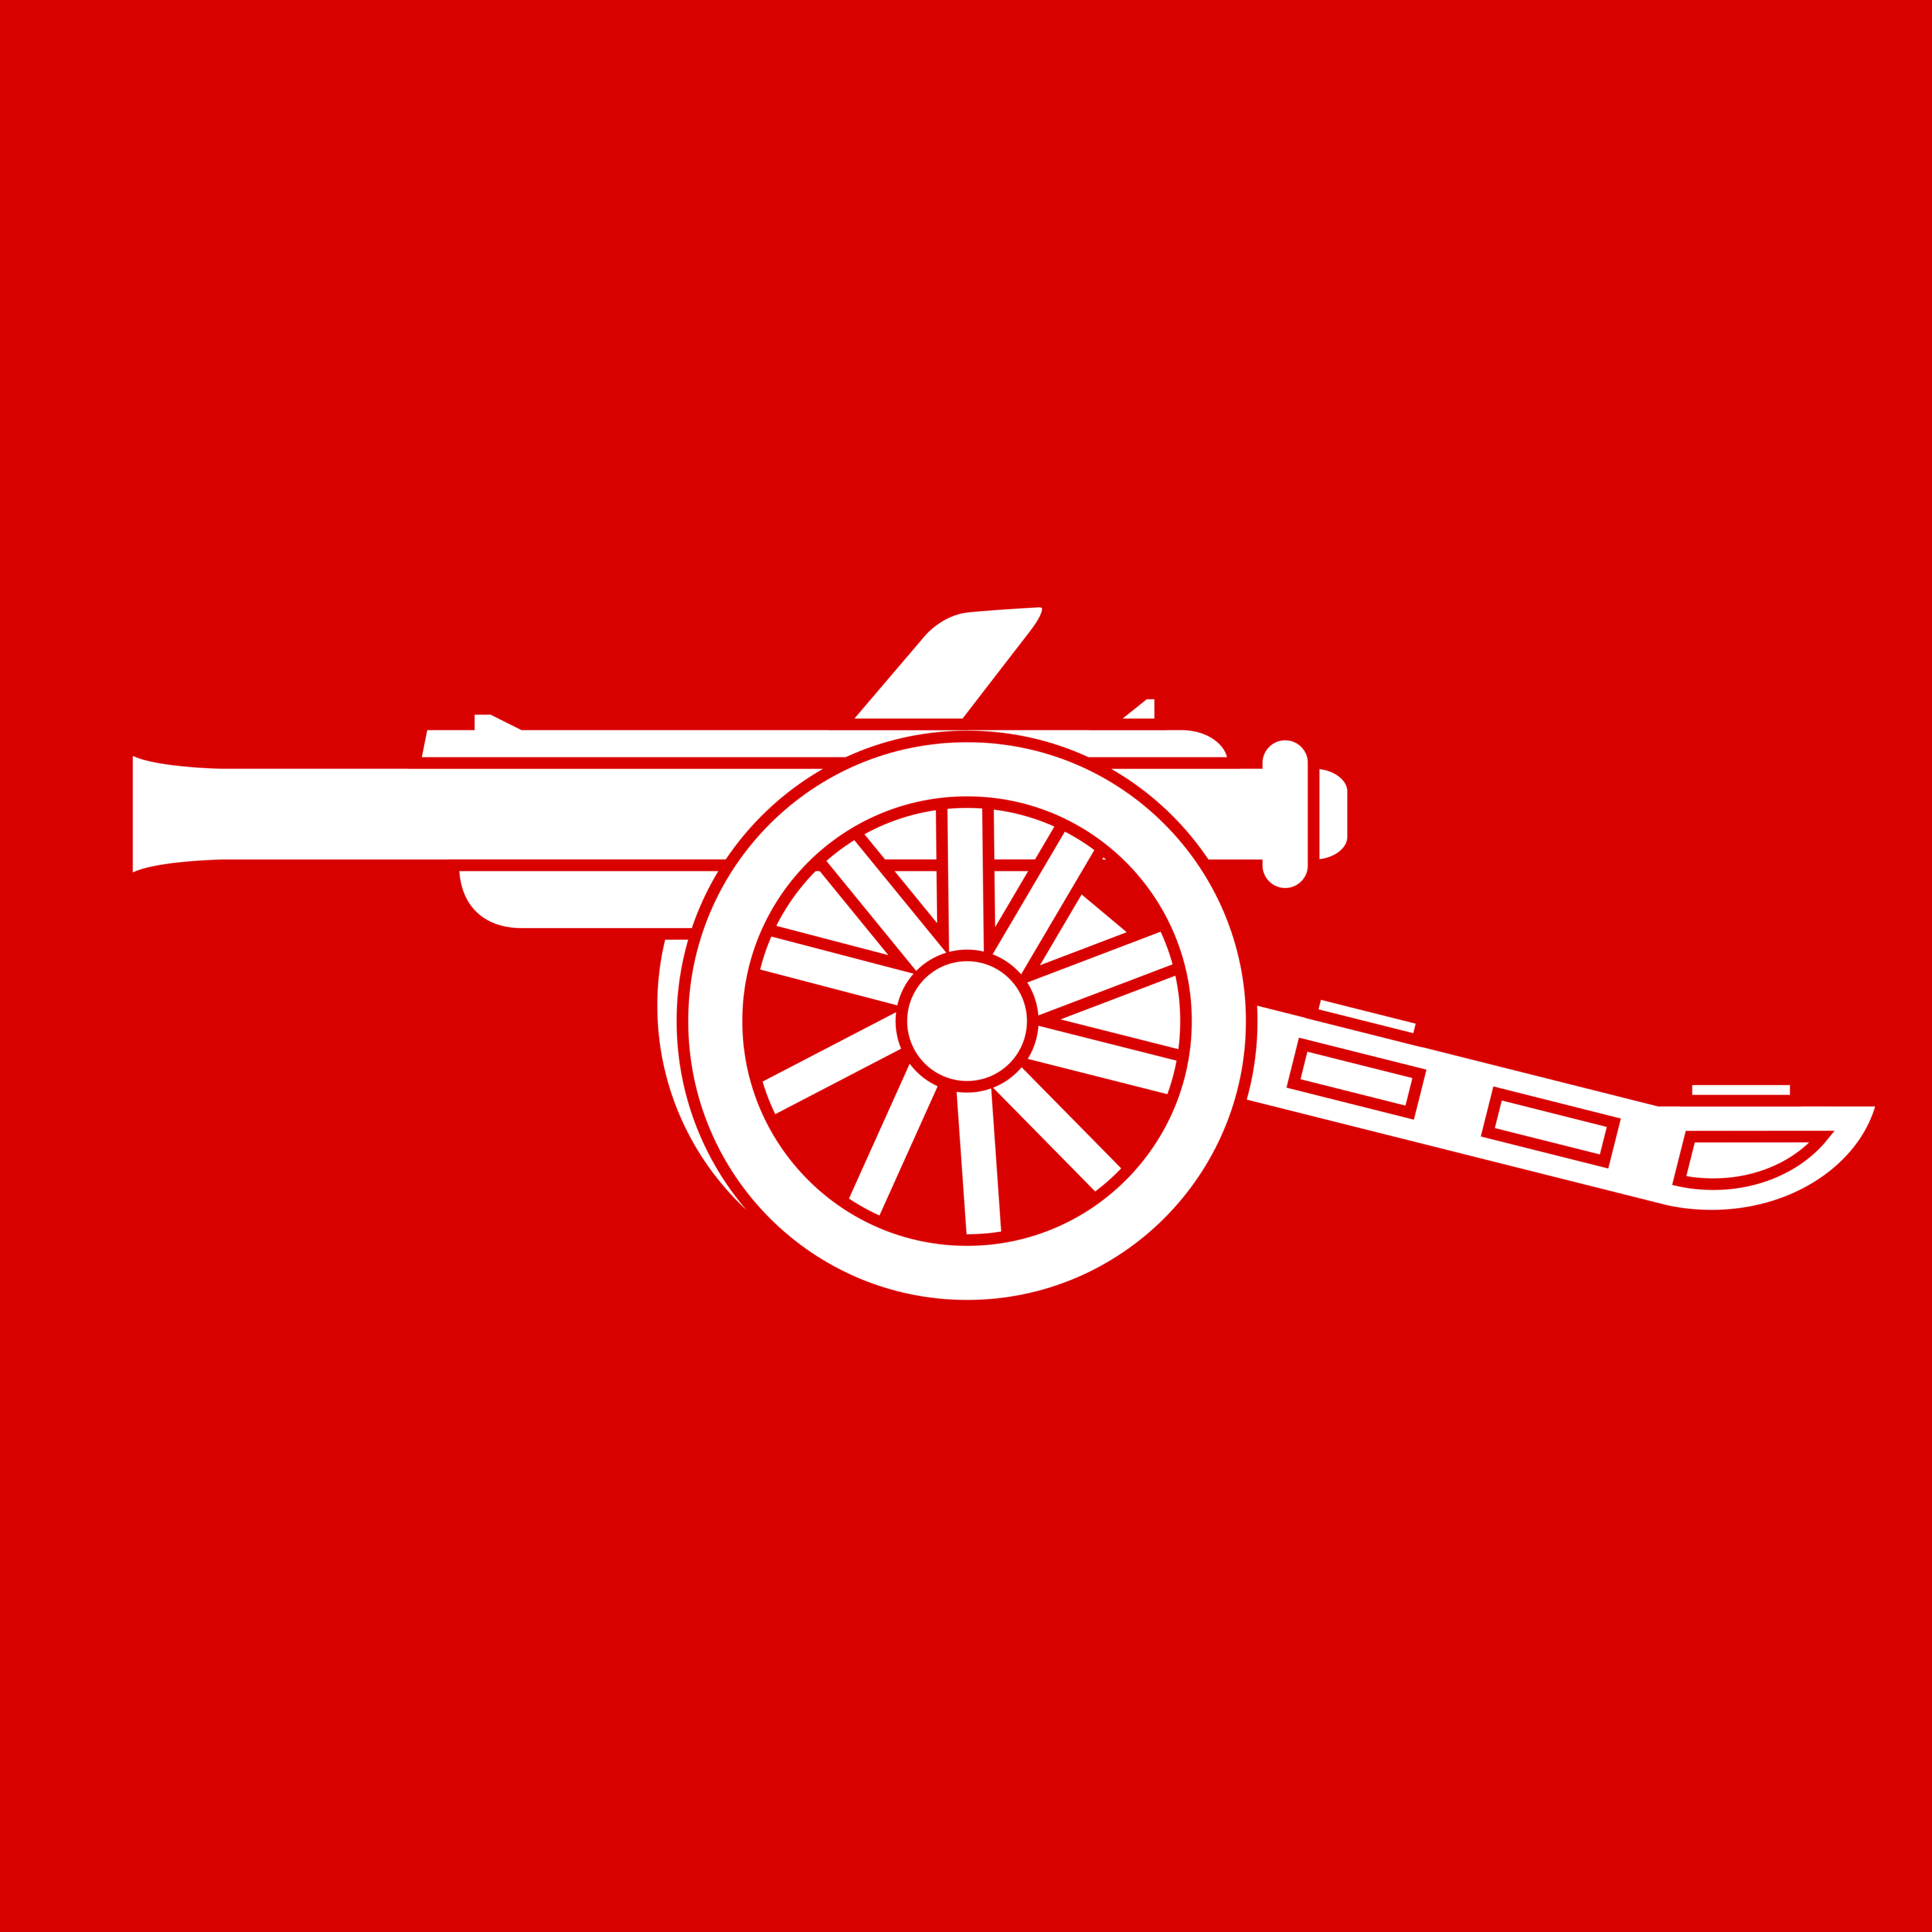 Arsenal FC Logo 1967